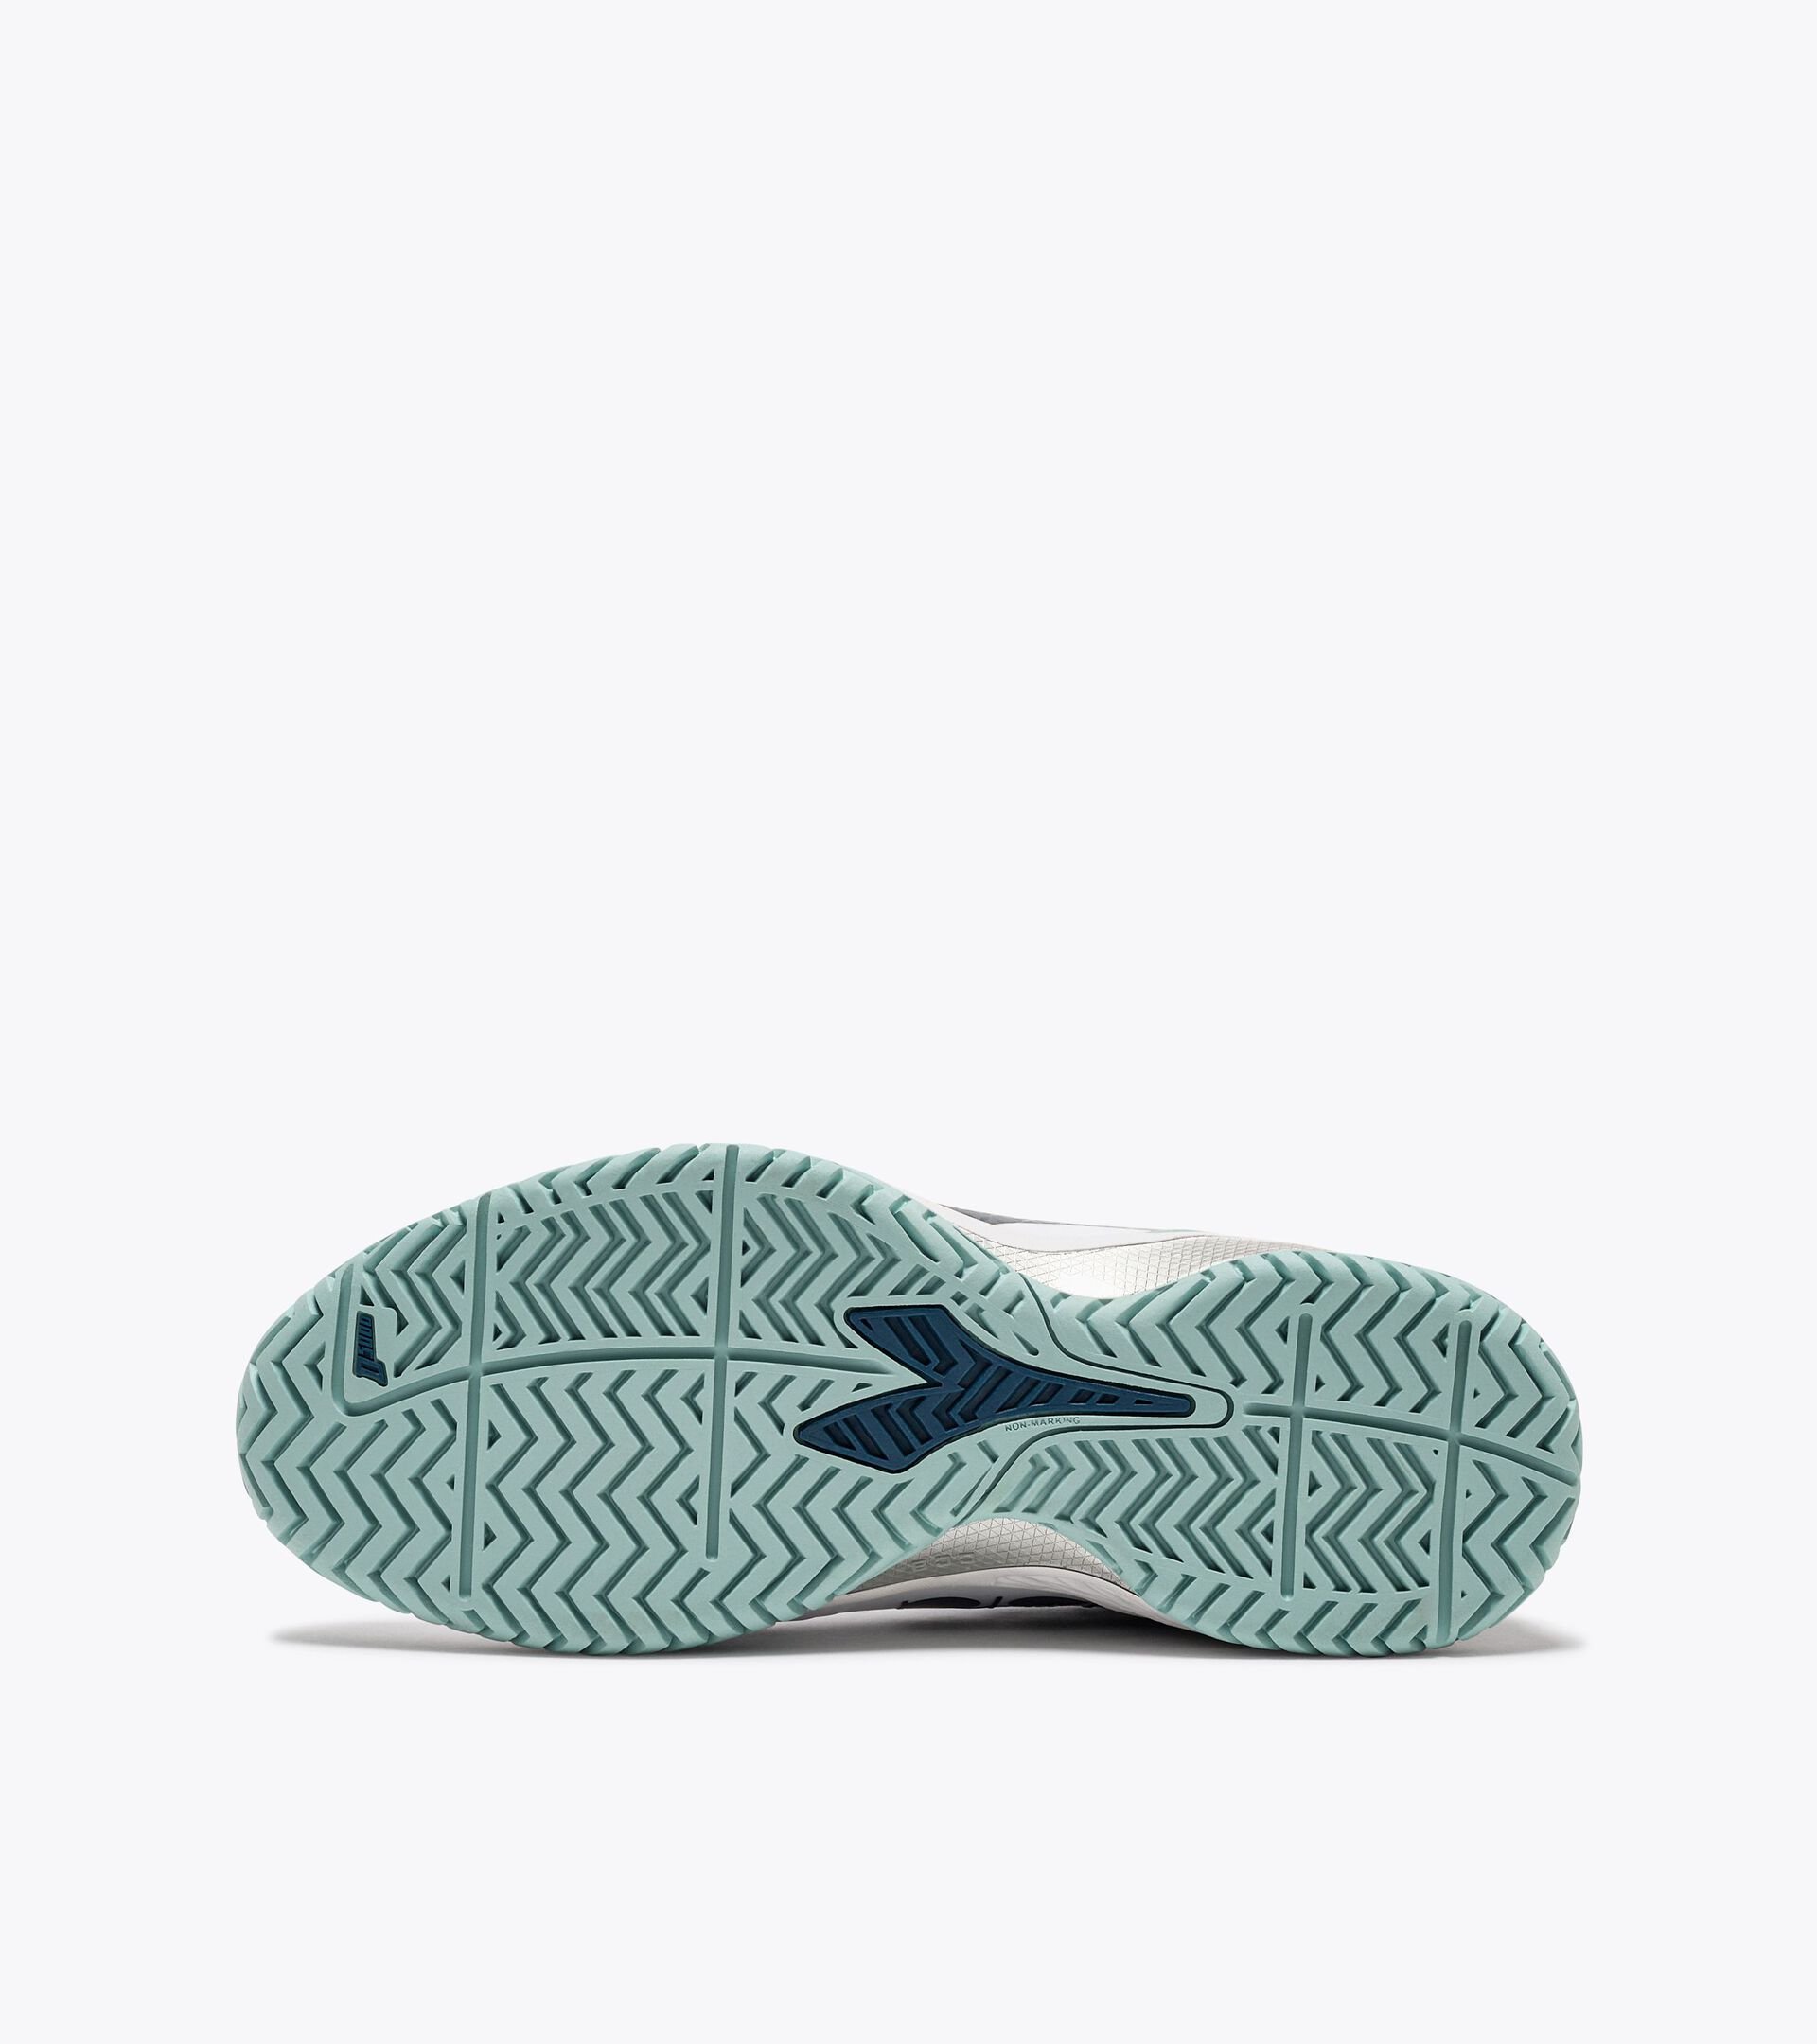 Chaussures de tennis pour terrains durs ou en terre battue - Femme  BLUSHIELD TORNEO 2 W AG WHITE/LEGION BLUE/SURF SPRAY - Diadora